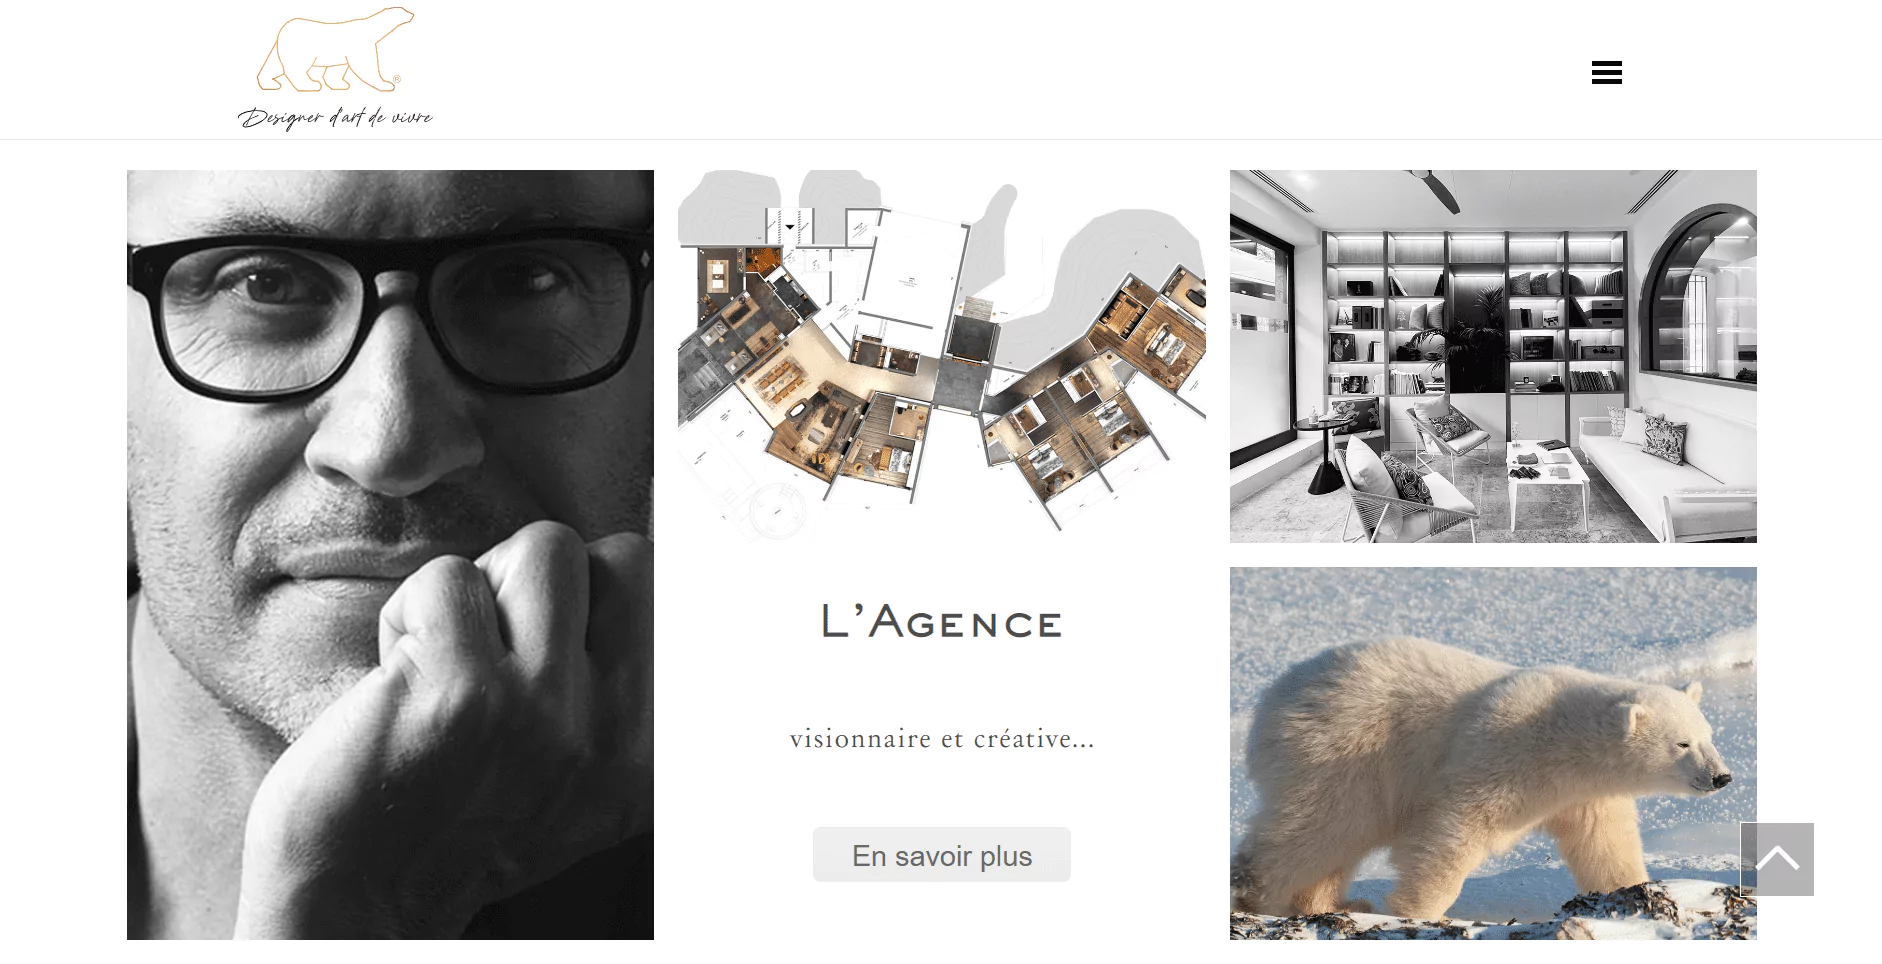 baccana-digital-consulting-client-project-serenite-luxury-monaco-design-agency